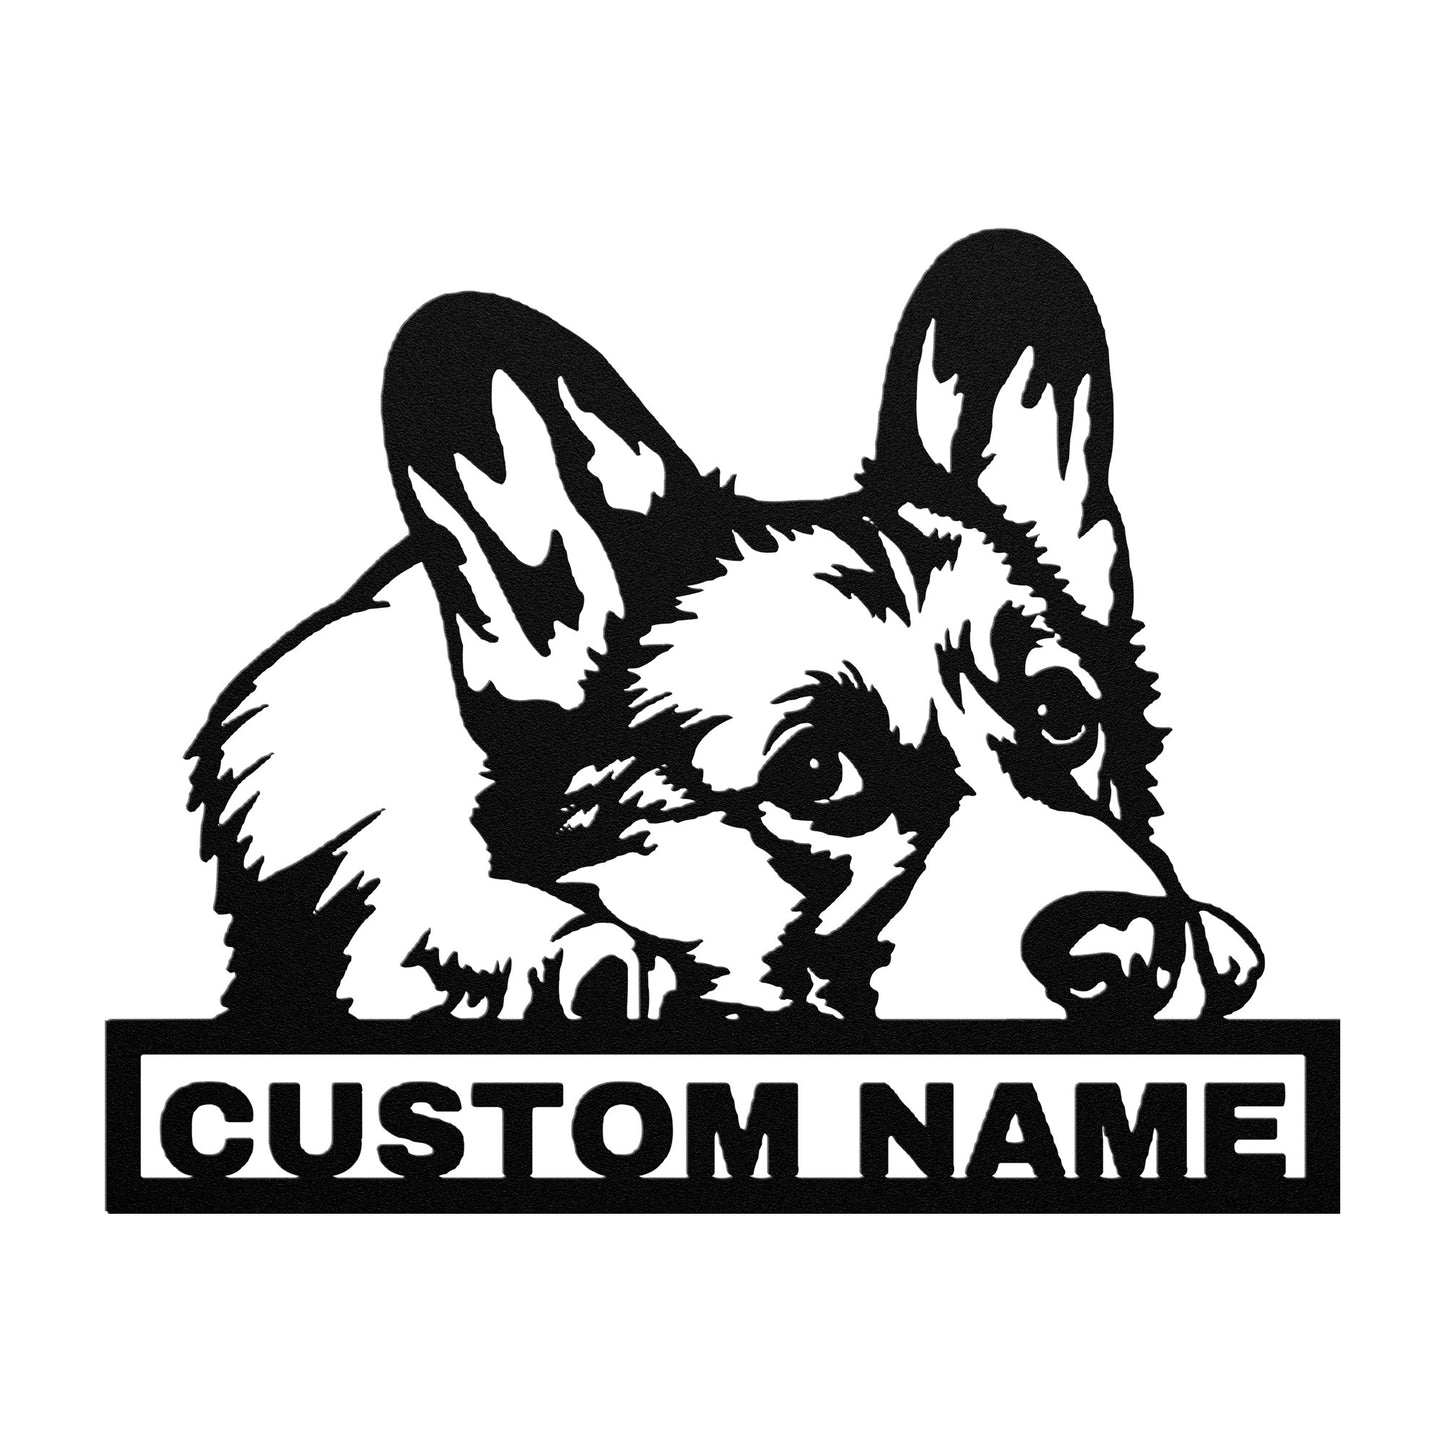 Personalized Corgi Dog Metal Sign - Corgi Custom Name Wall Decor, Metal Signs Customized Outdoor Indoor, Wall Art Gift For Corgi Dog Lover